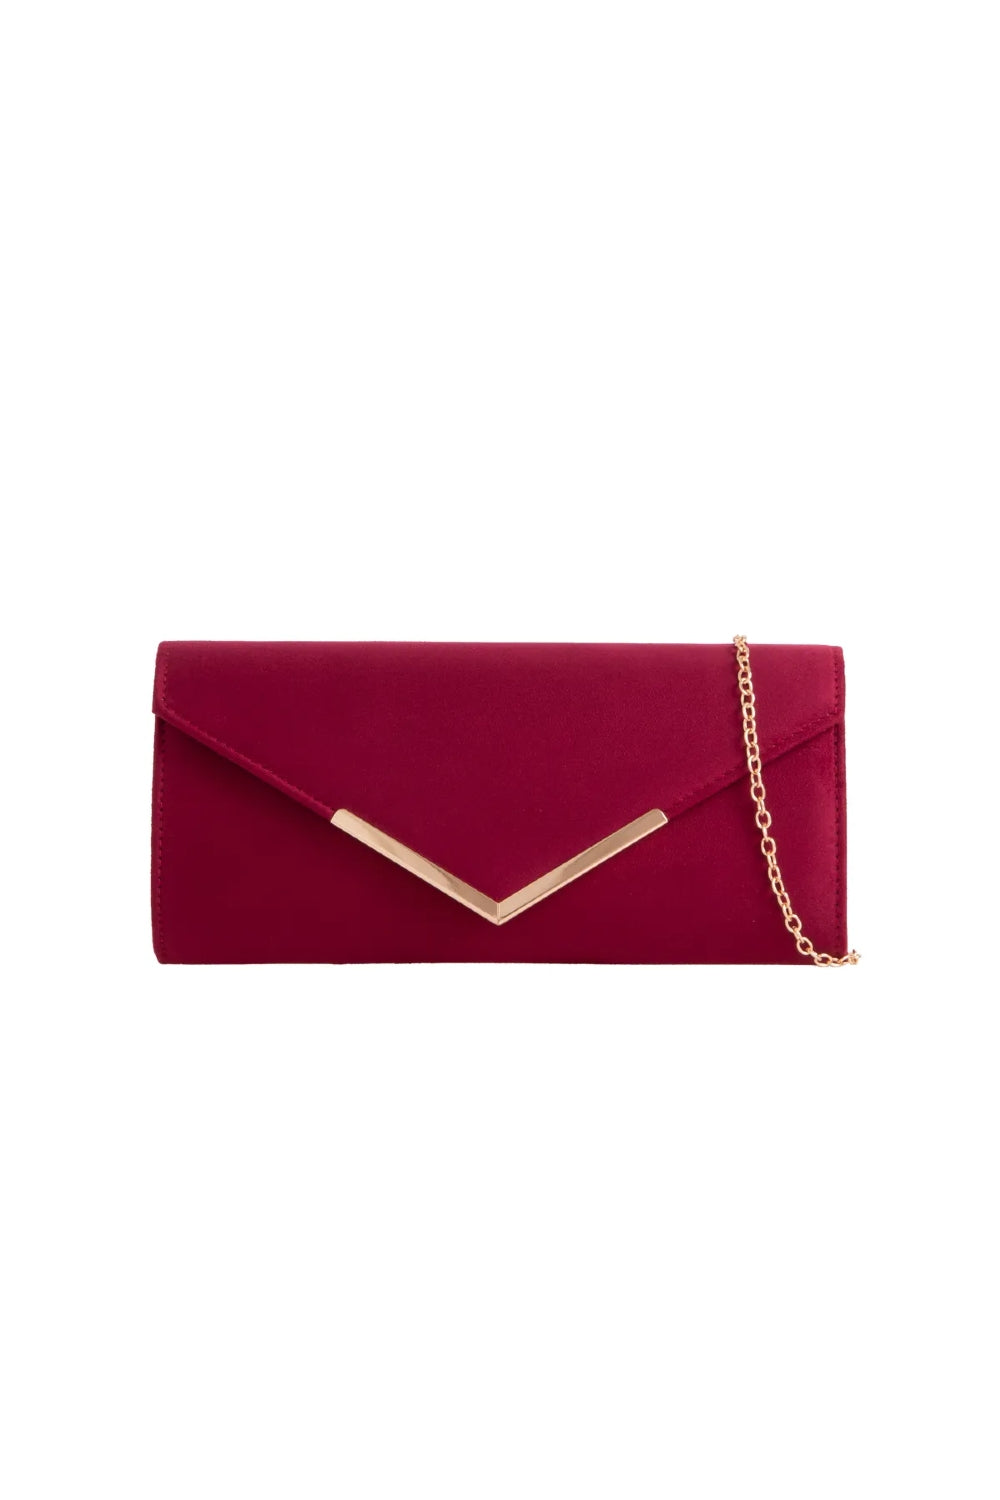 Burgundy Suede Envelope Clutch Bag ALL2435